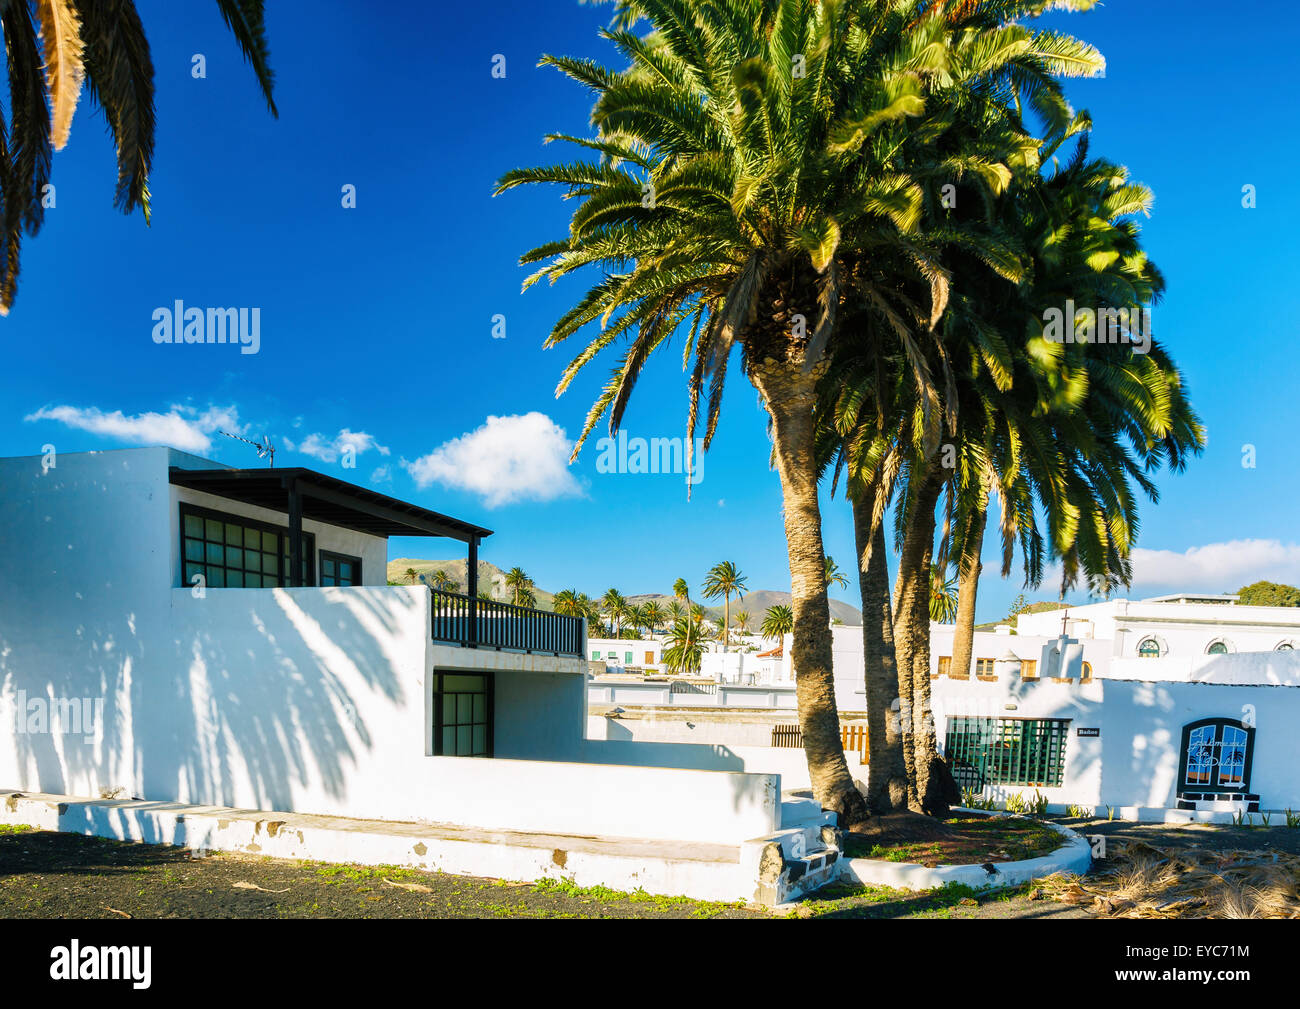 Haria Dorf. Lanzarote, Kanarische Inseln, Spanien, Europa. Stockfoto